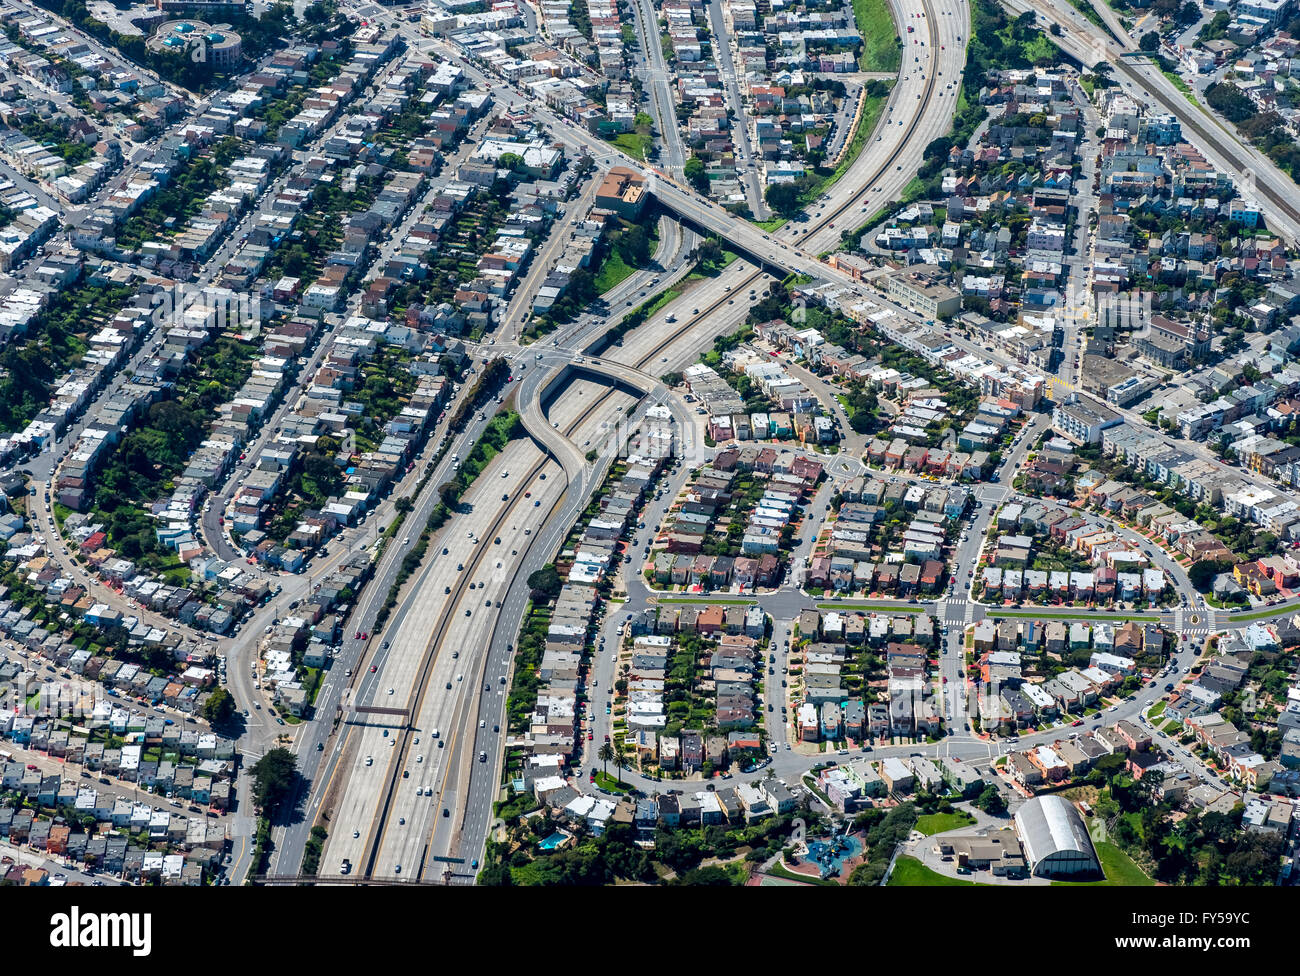 Aerial view, suburban housing development near a highway, San Francisco Bay Area, California, USA Stock Photo